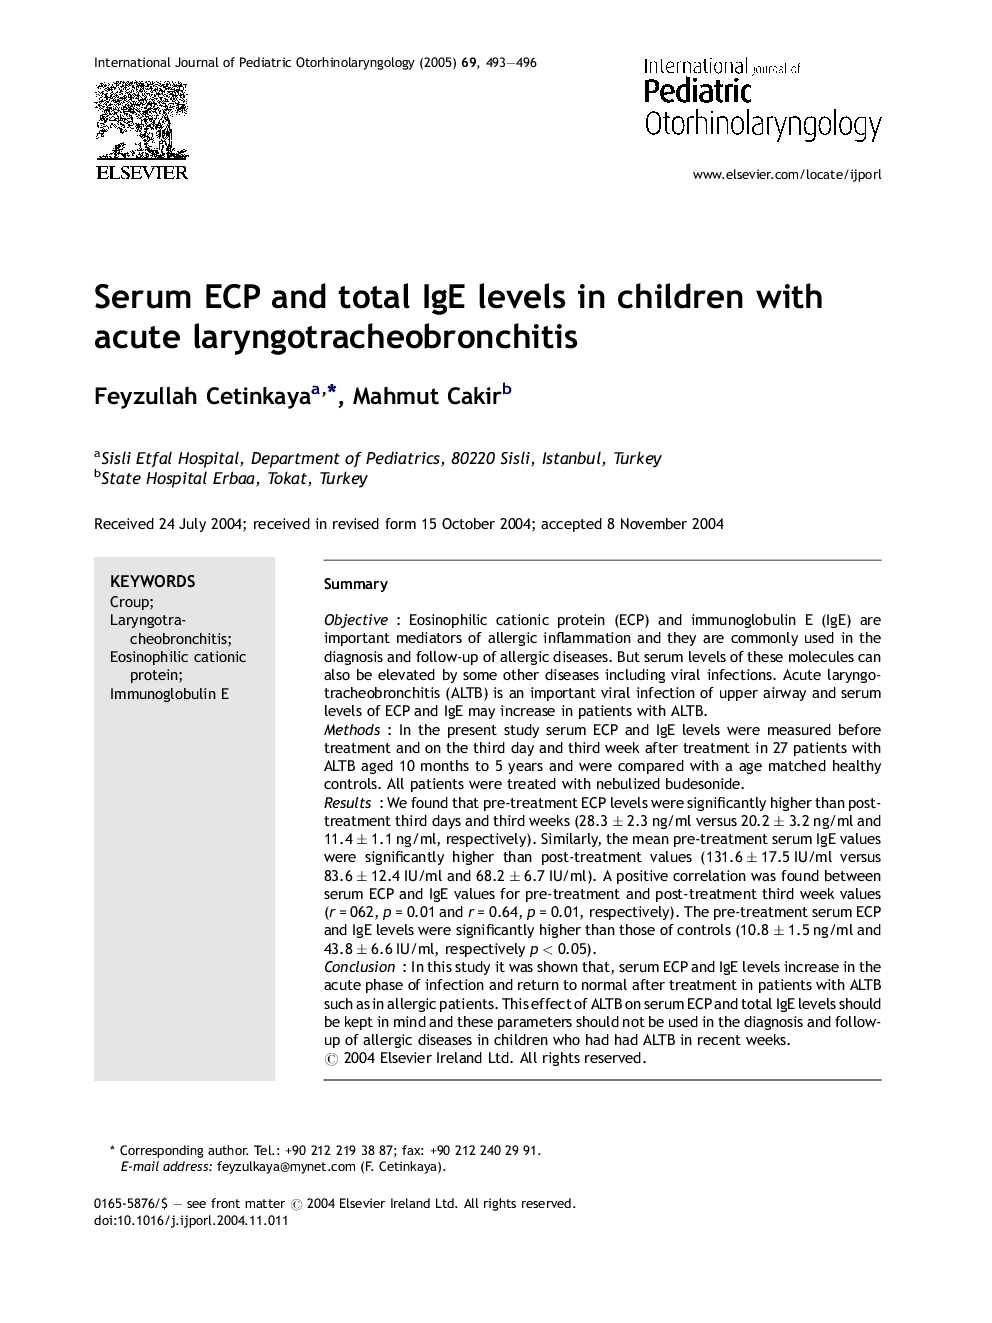 Serum ECP and total IgE levels in children with acute laryngotracheobronchitis